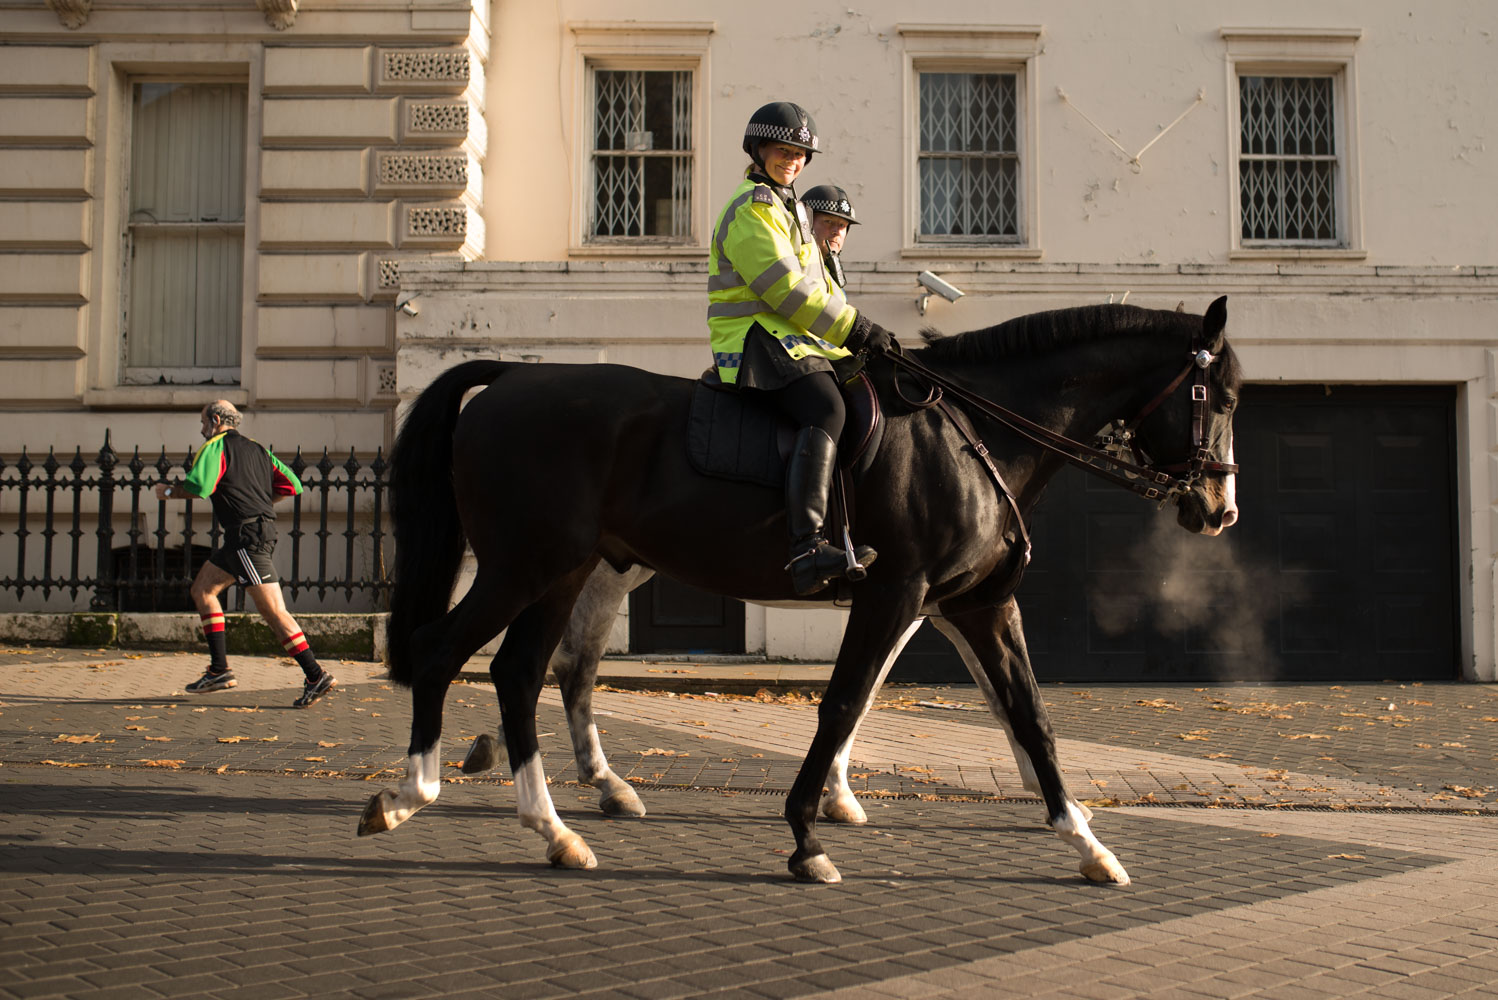 police patrolling london streets